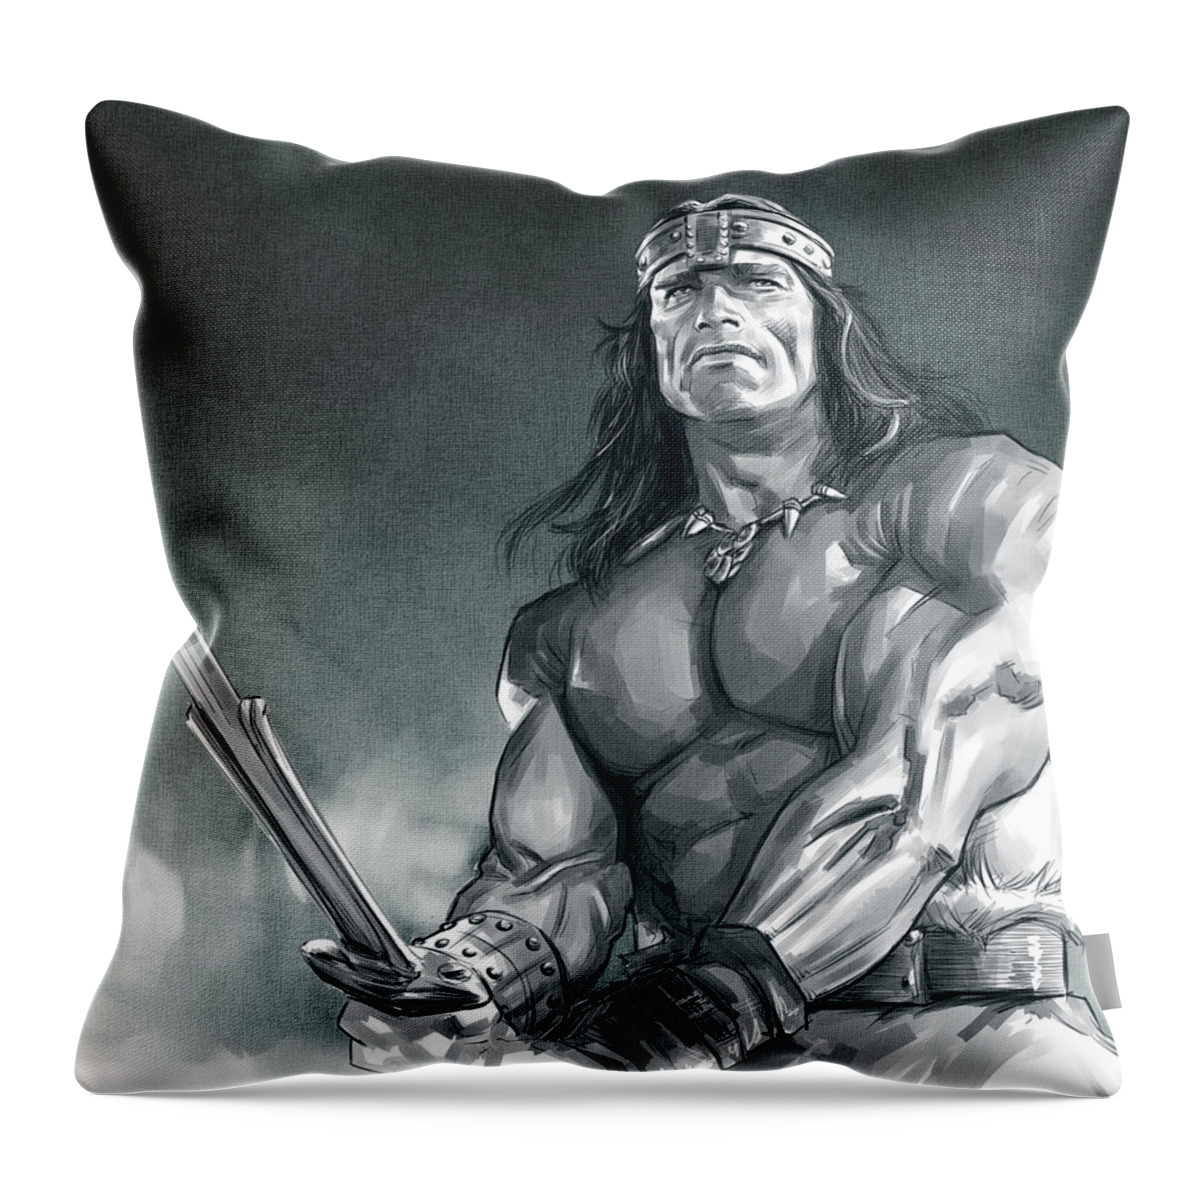 Conan The Barbarian Throw Pillow featuring the digital art Conan The Barbarian by Darko Babovic